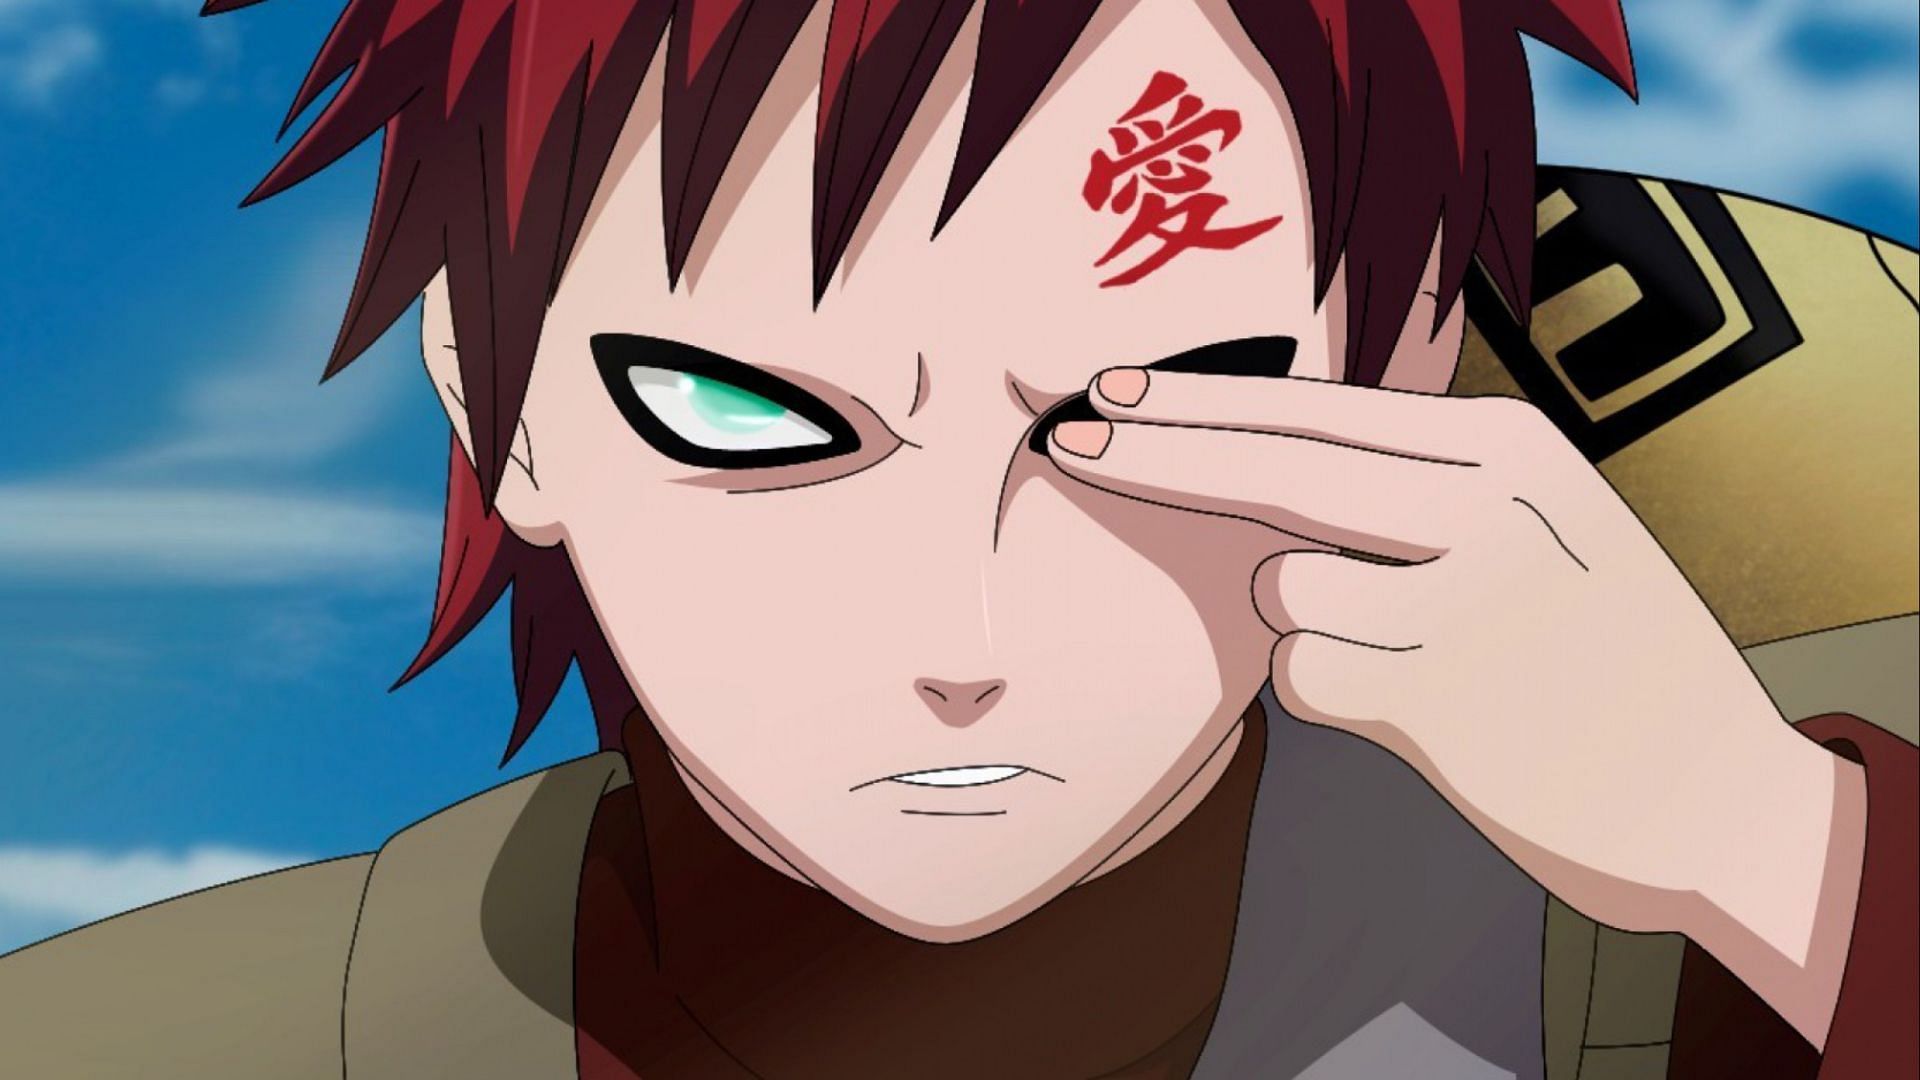 Kanji Love  Naruto gaara, Naruto tattoo, Gaara tattoo